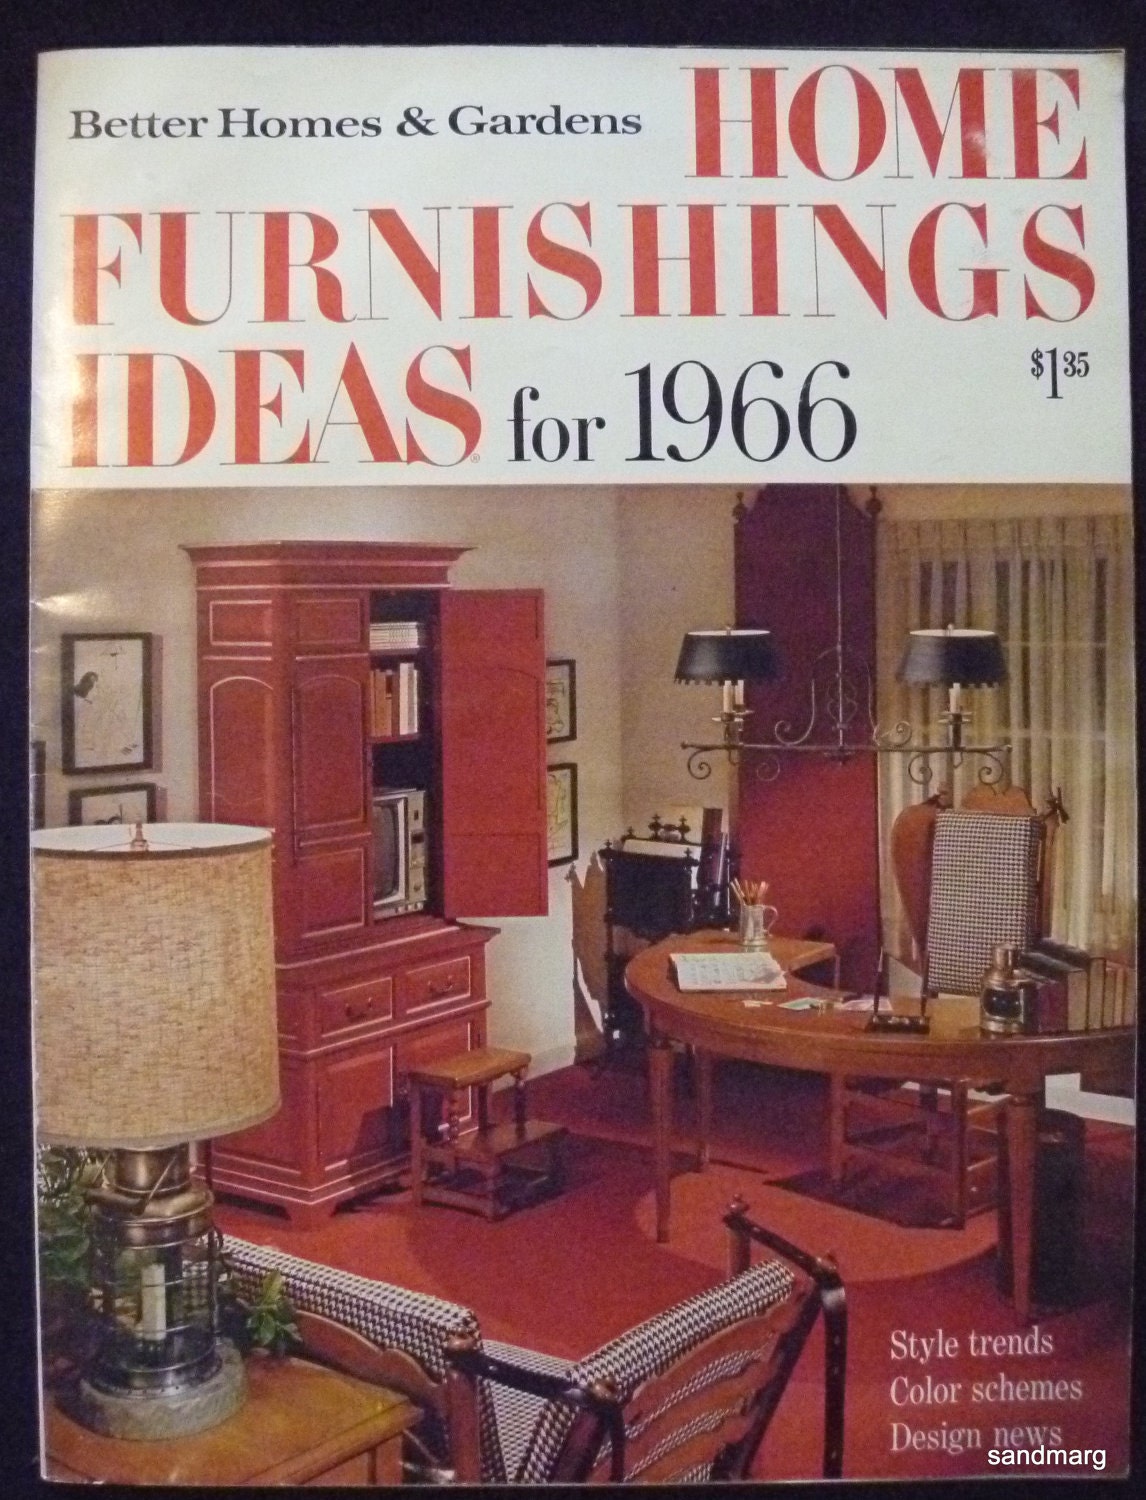 furnishing ideas